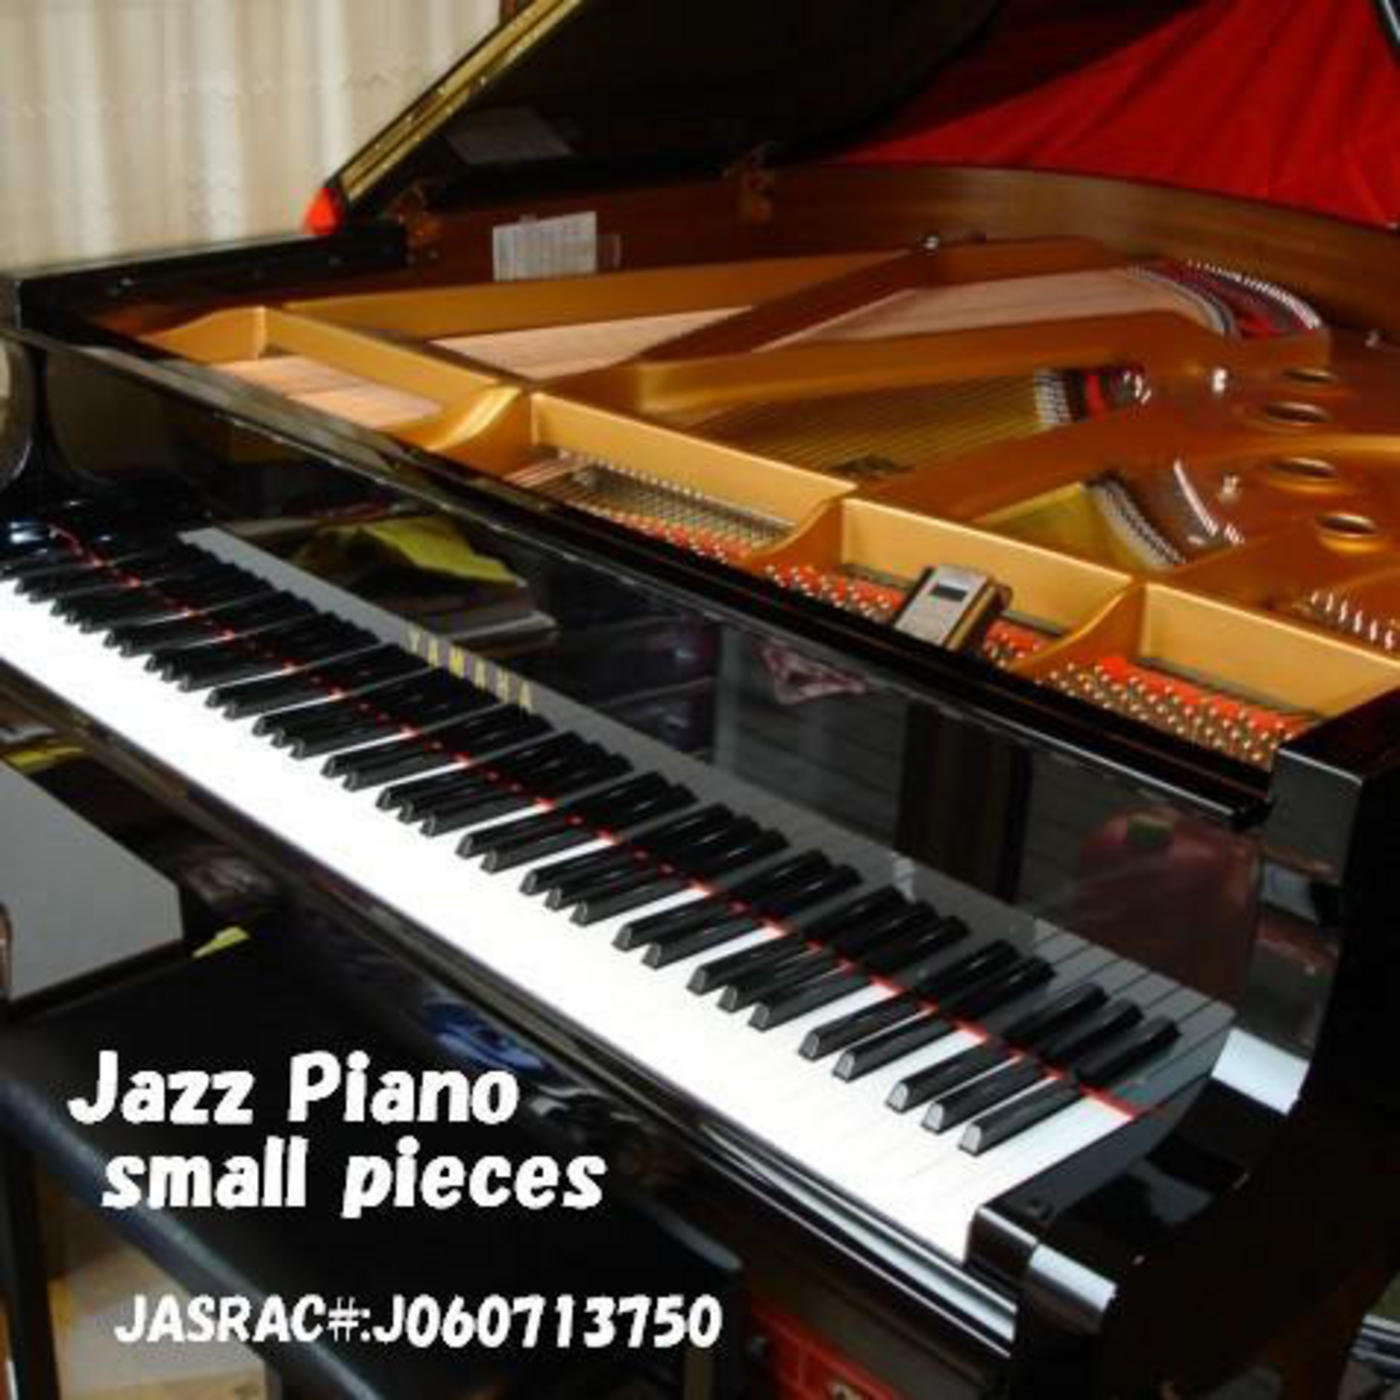 Jazz Piano small pieces